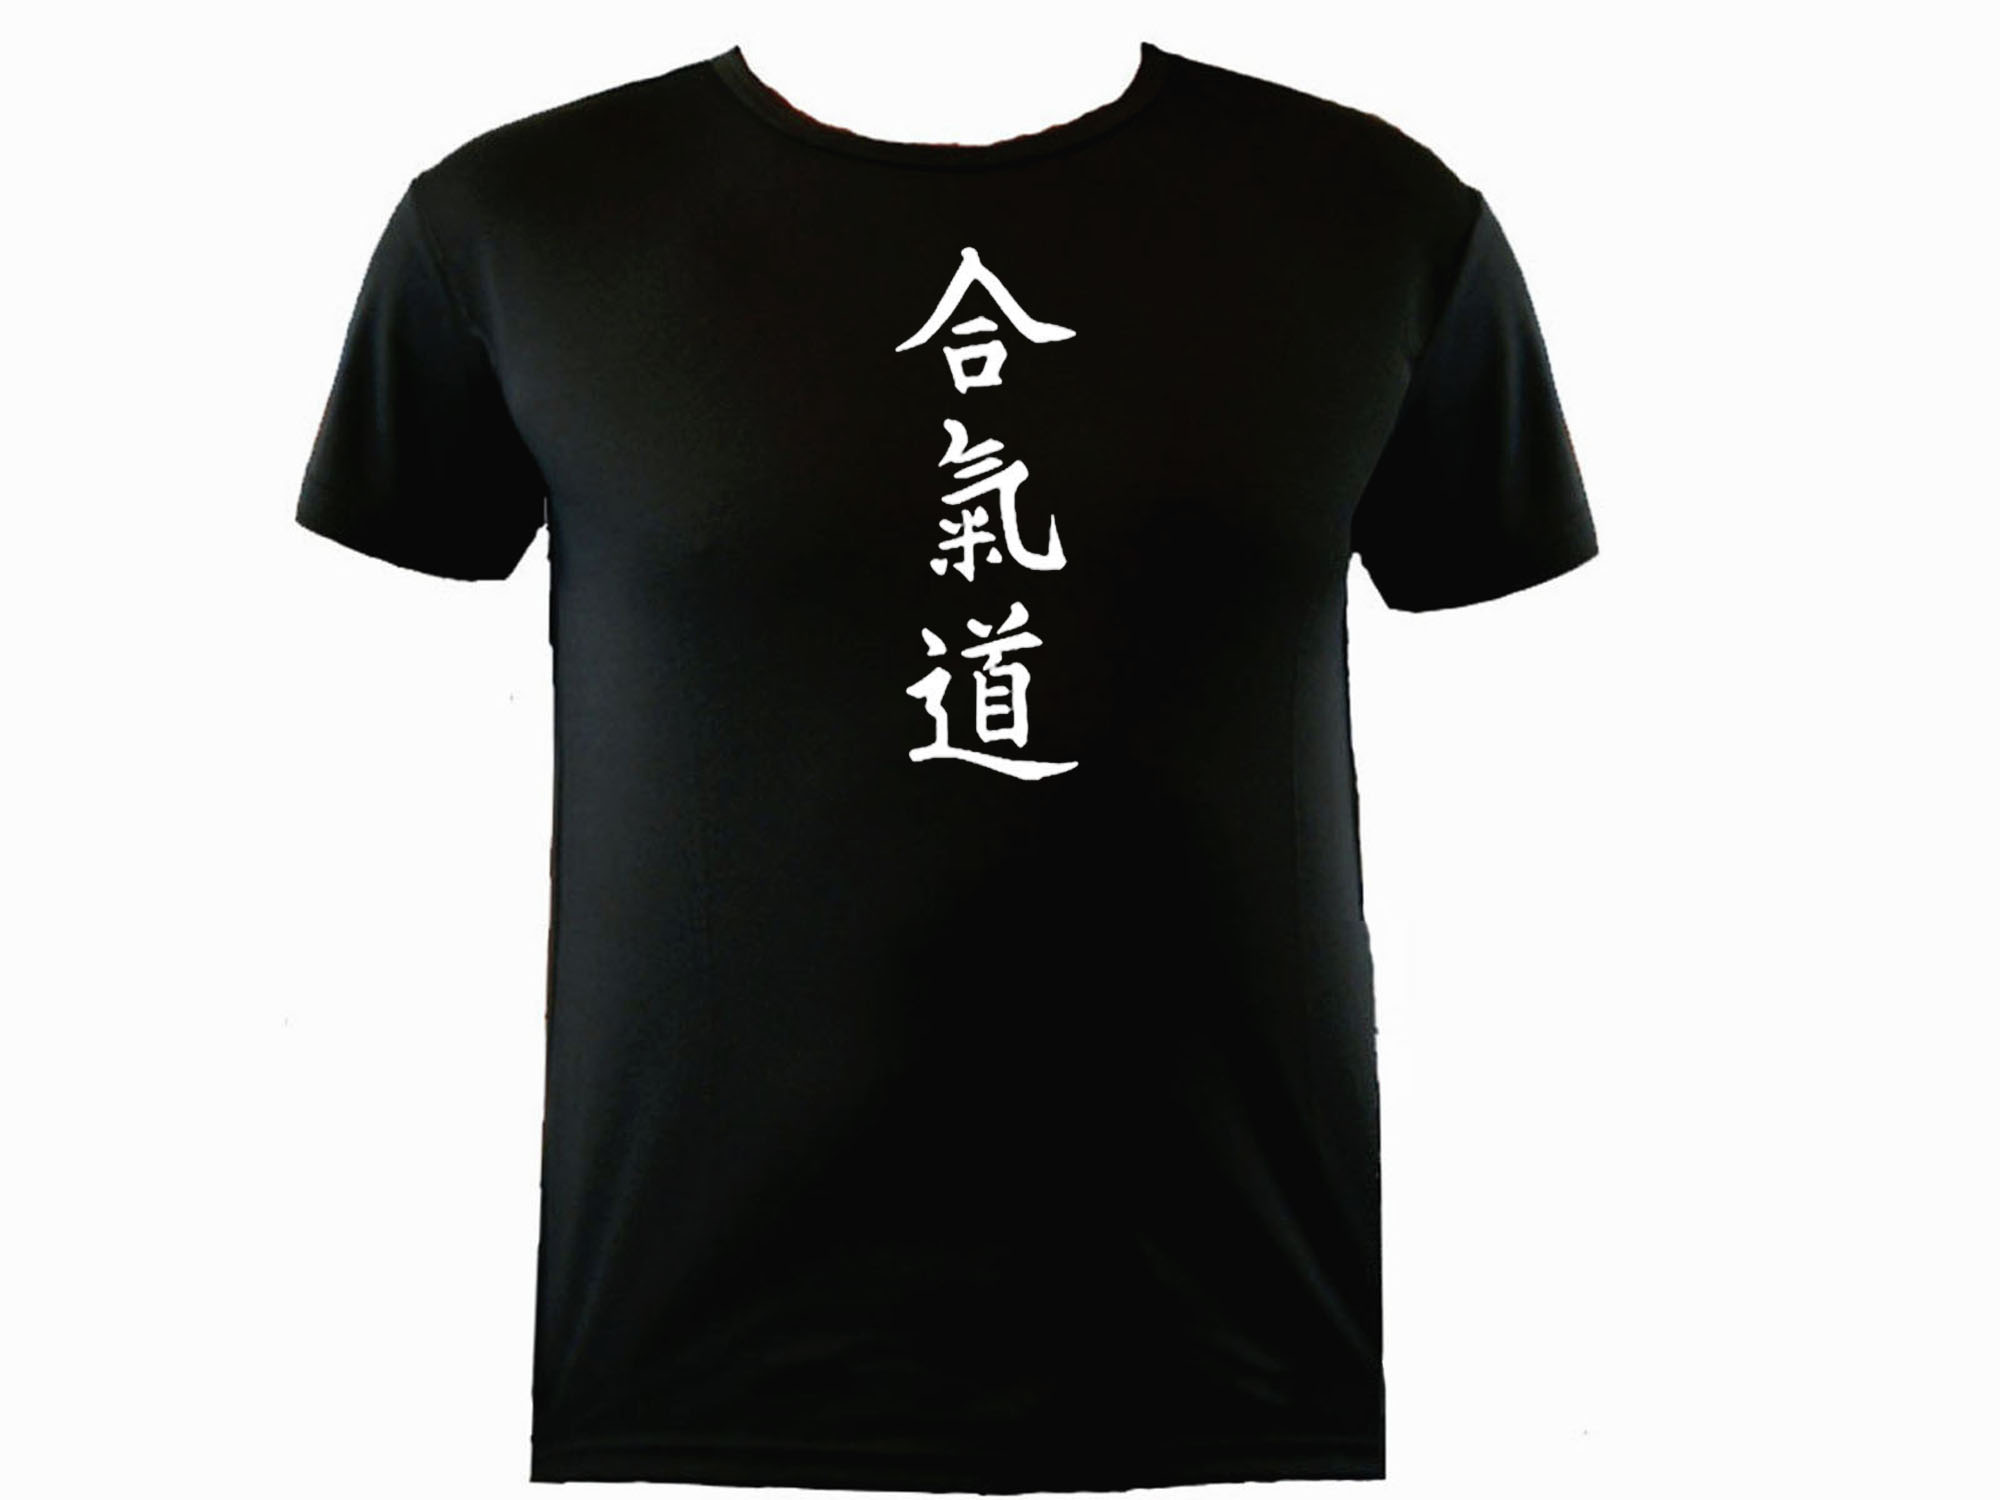 Aikido kanji script martial arts moisture wick (dri fit) shirt